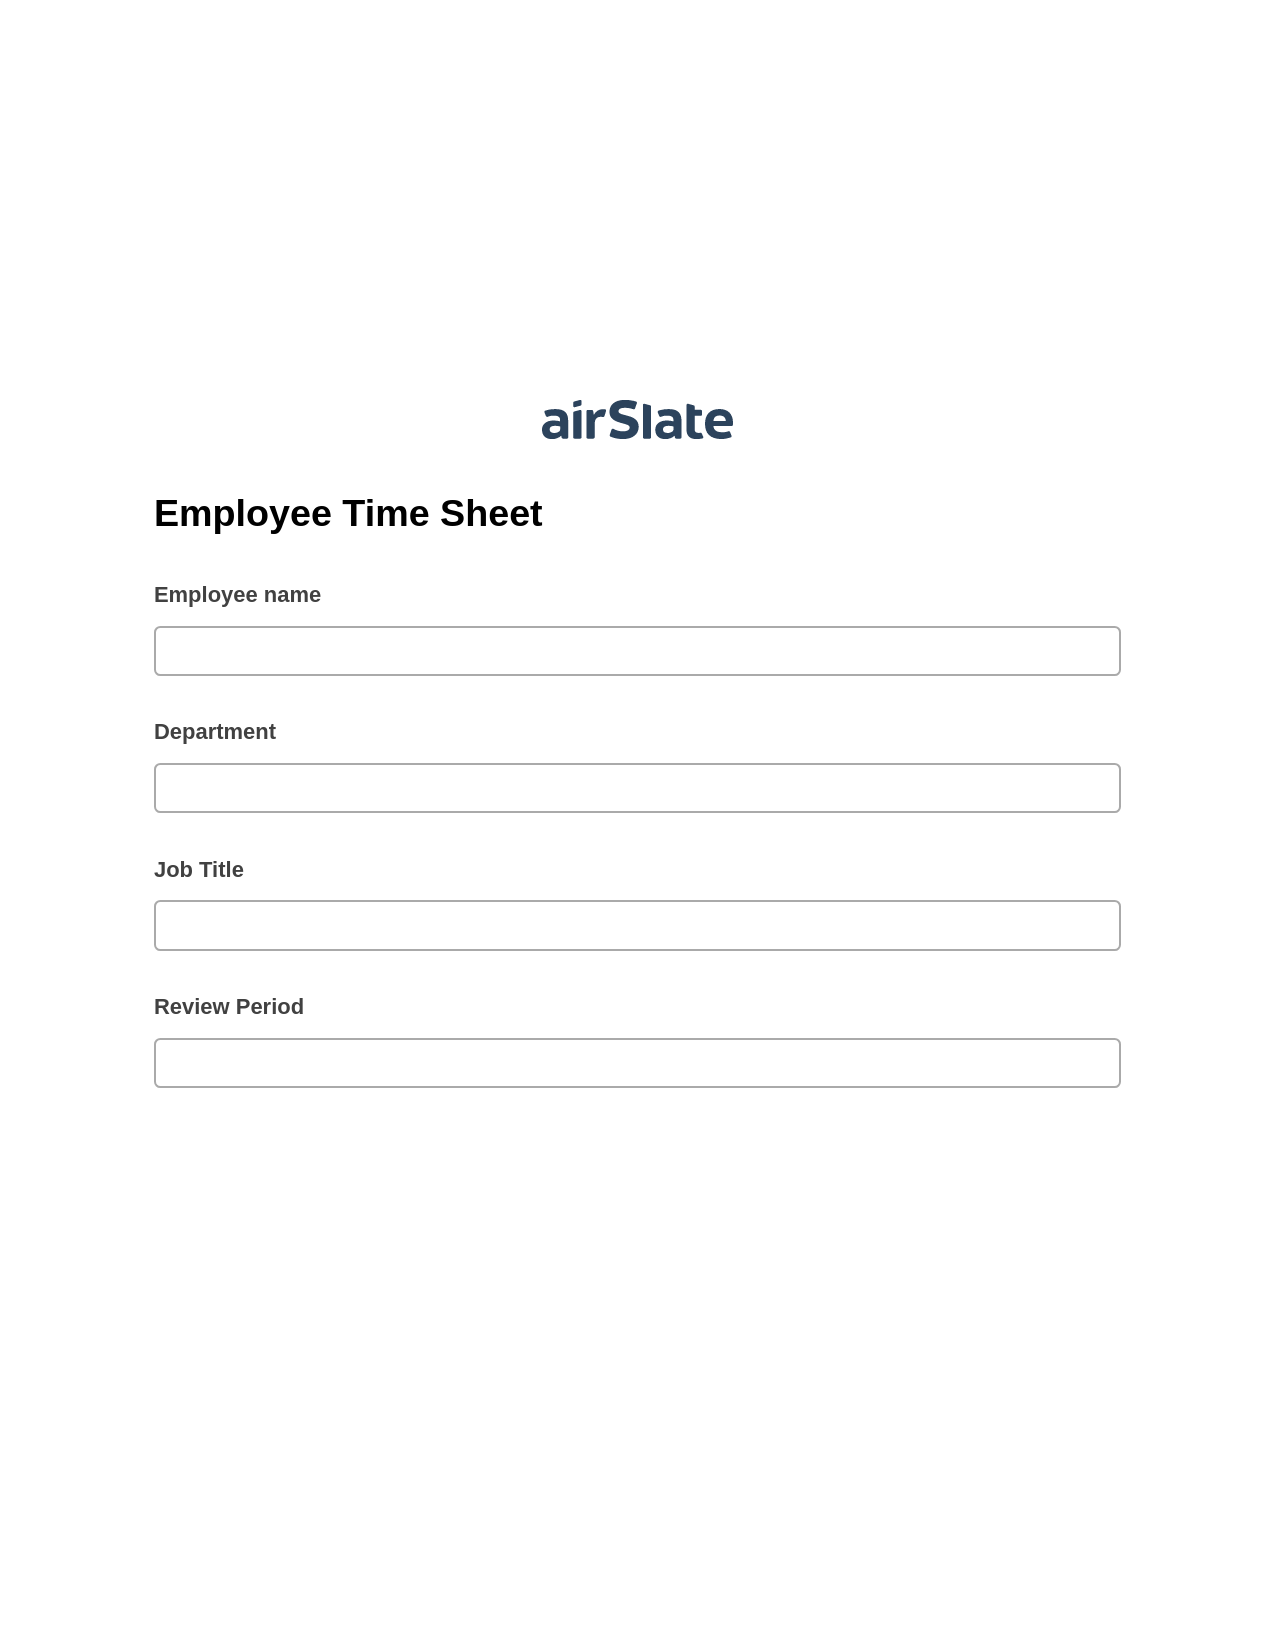 Multirole Employee Time Sheet Pre-fill from Office 365 Excel Bot, Revoke Access Bot, Slack Notification Postfinish Bot